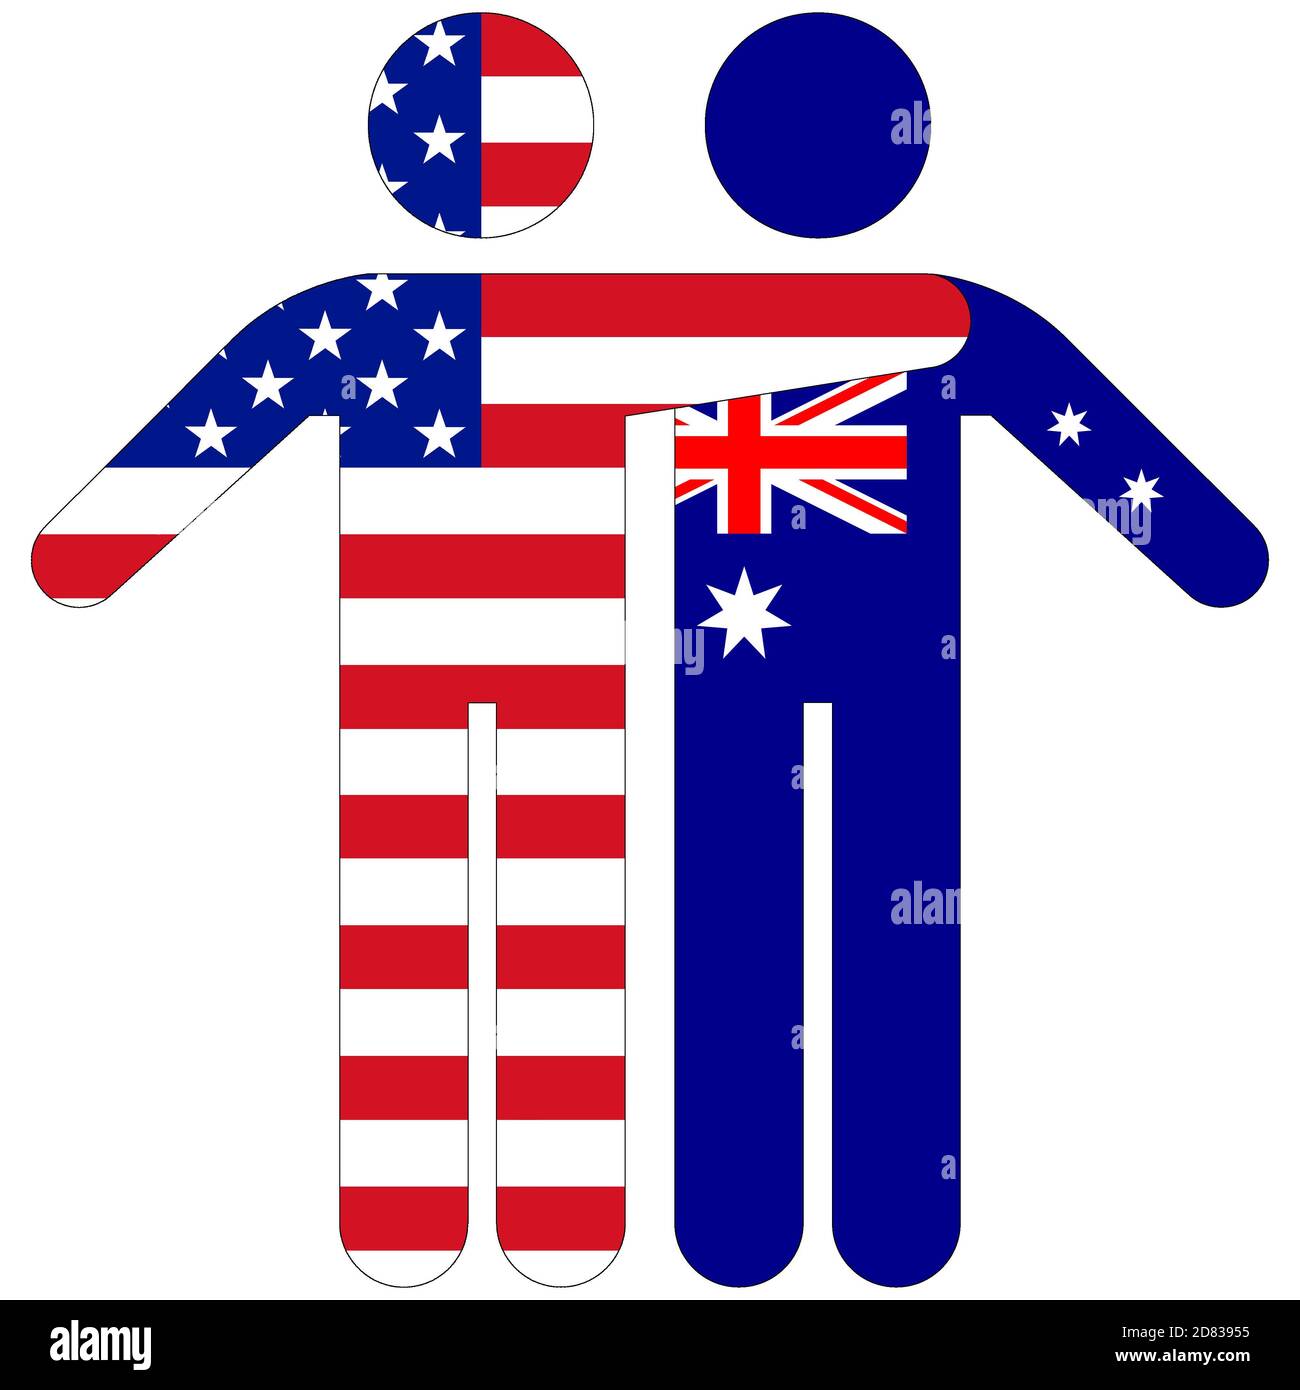 USA - Australia / friendship concept on white background Stock Photo